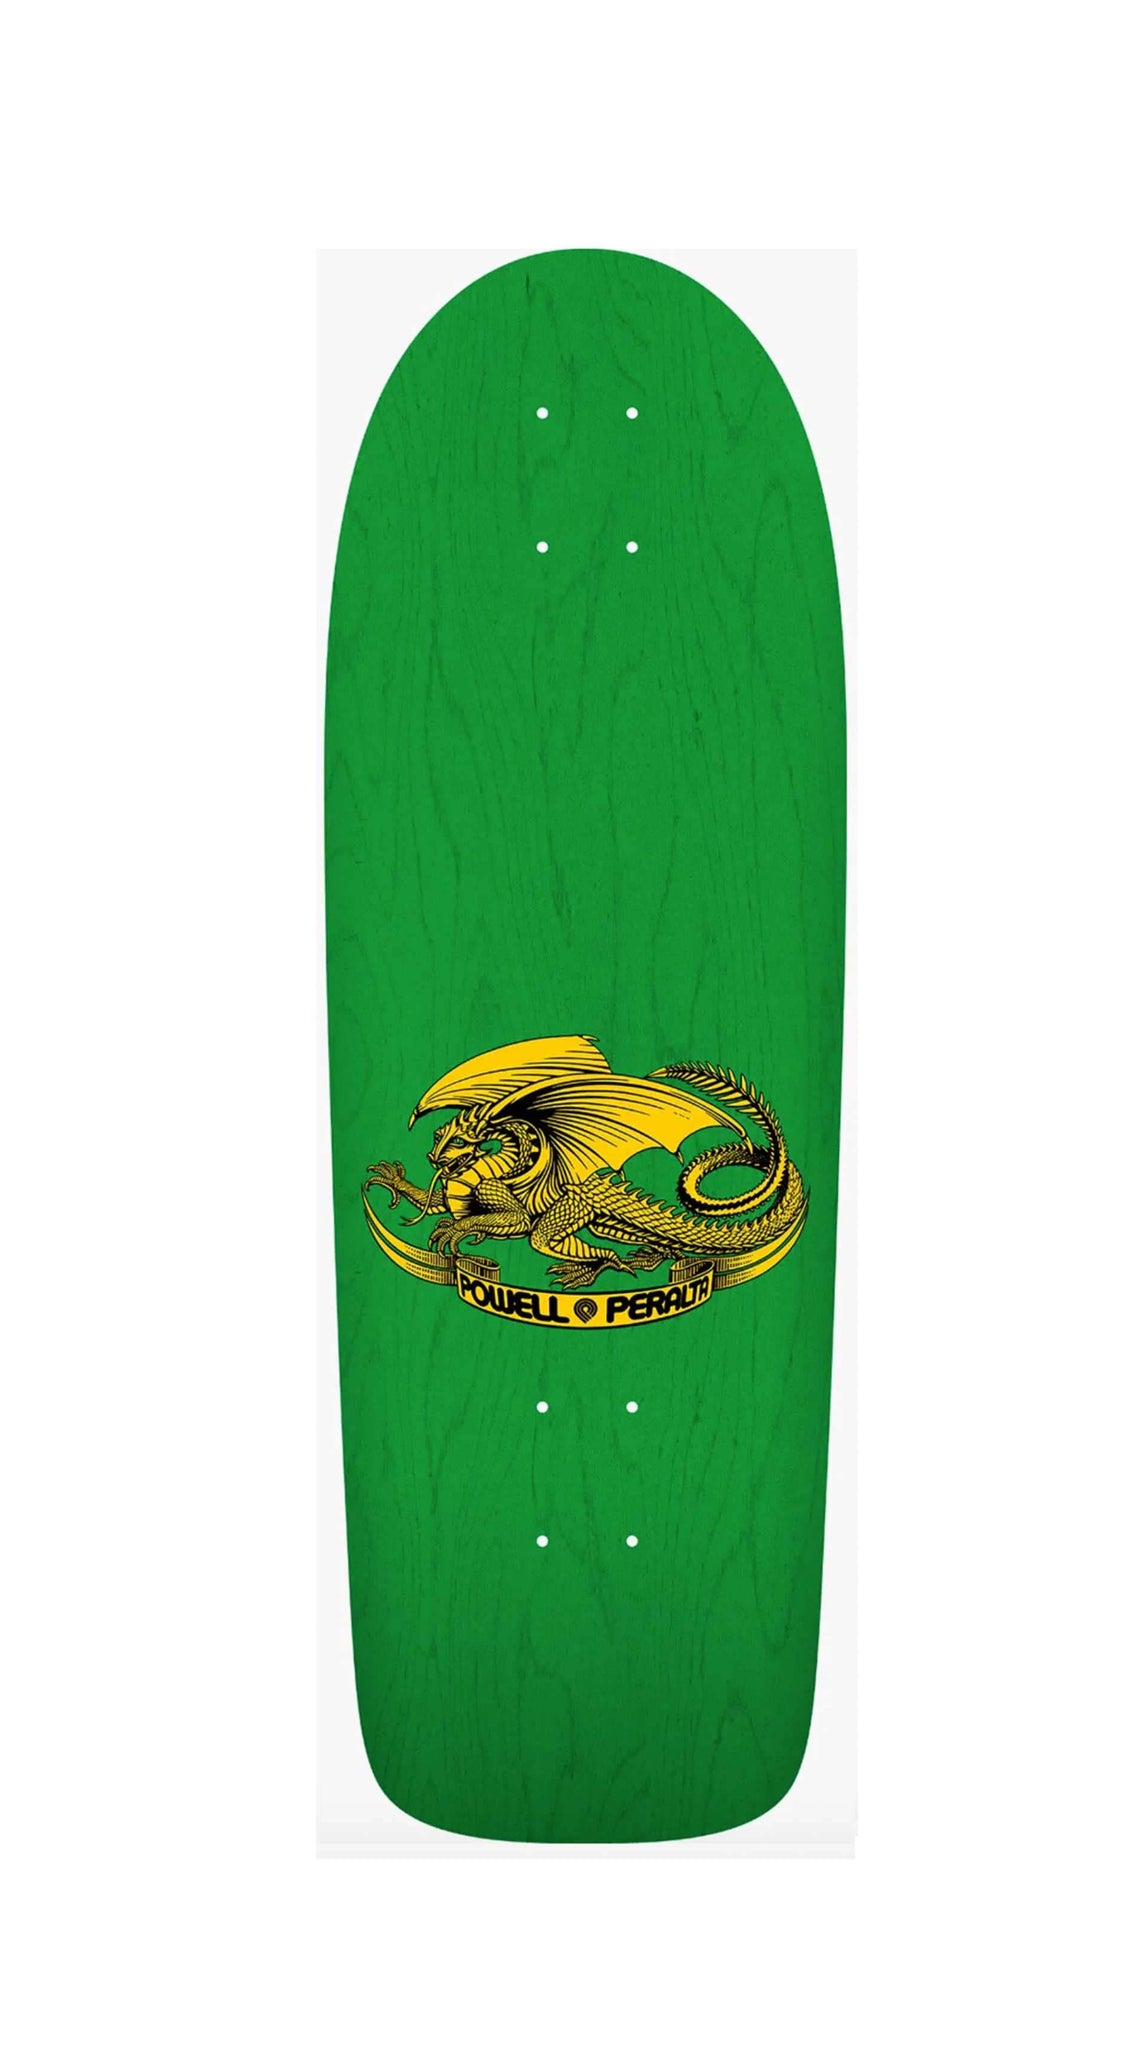 Powell Peralta Ray Rodriguez Skull and Sword OG Reissue Green Stain Skateboard Deck prebook- Tabla Skate Tabla/Deck Powell Peralta 